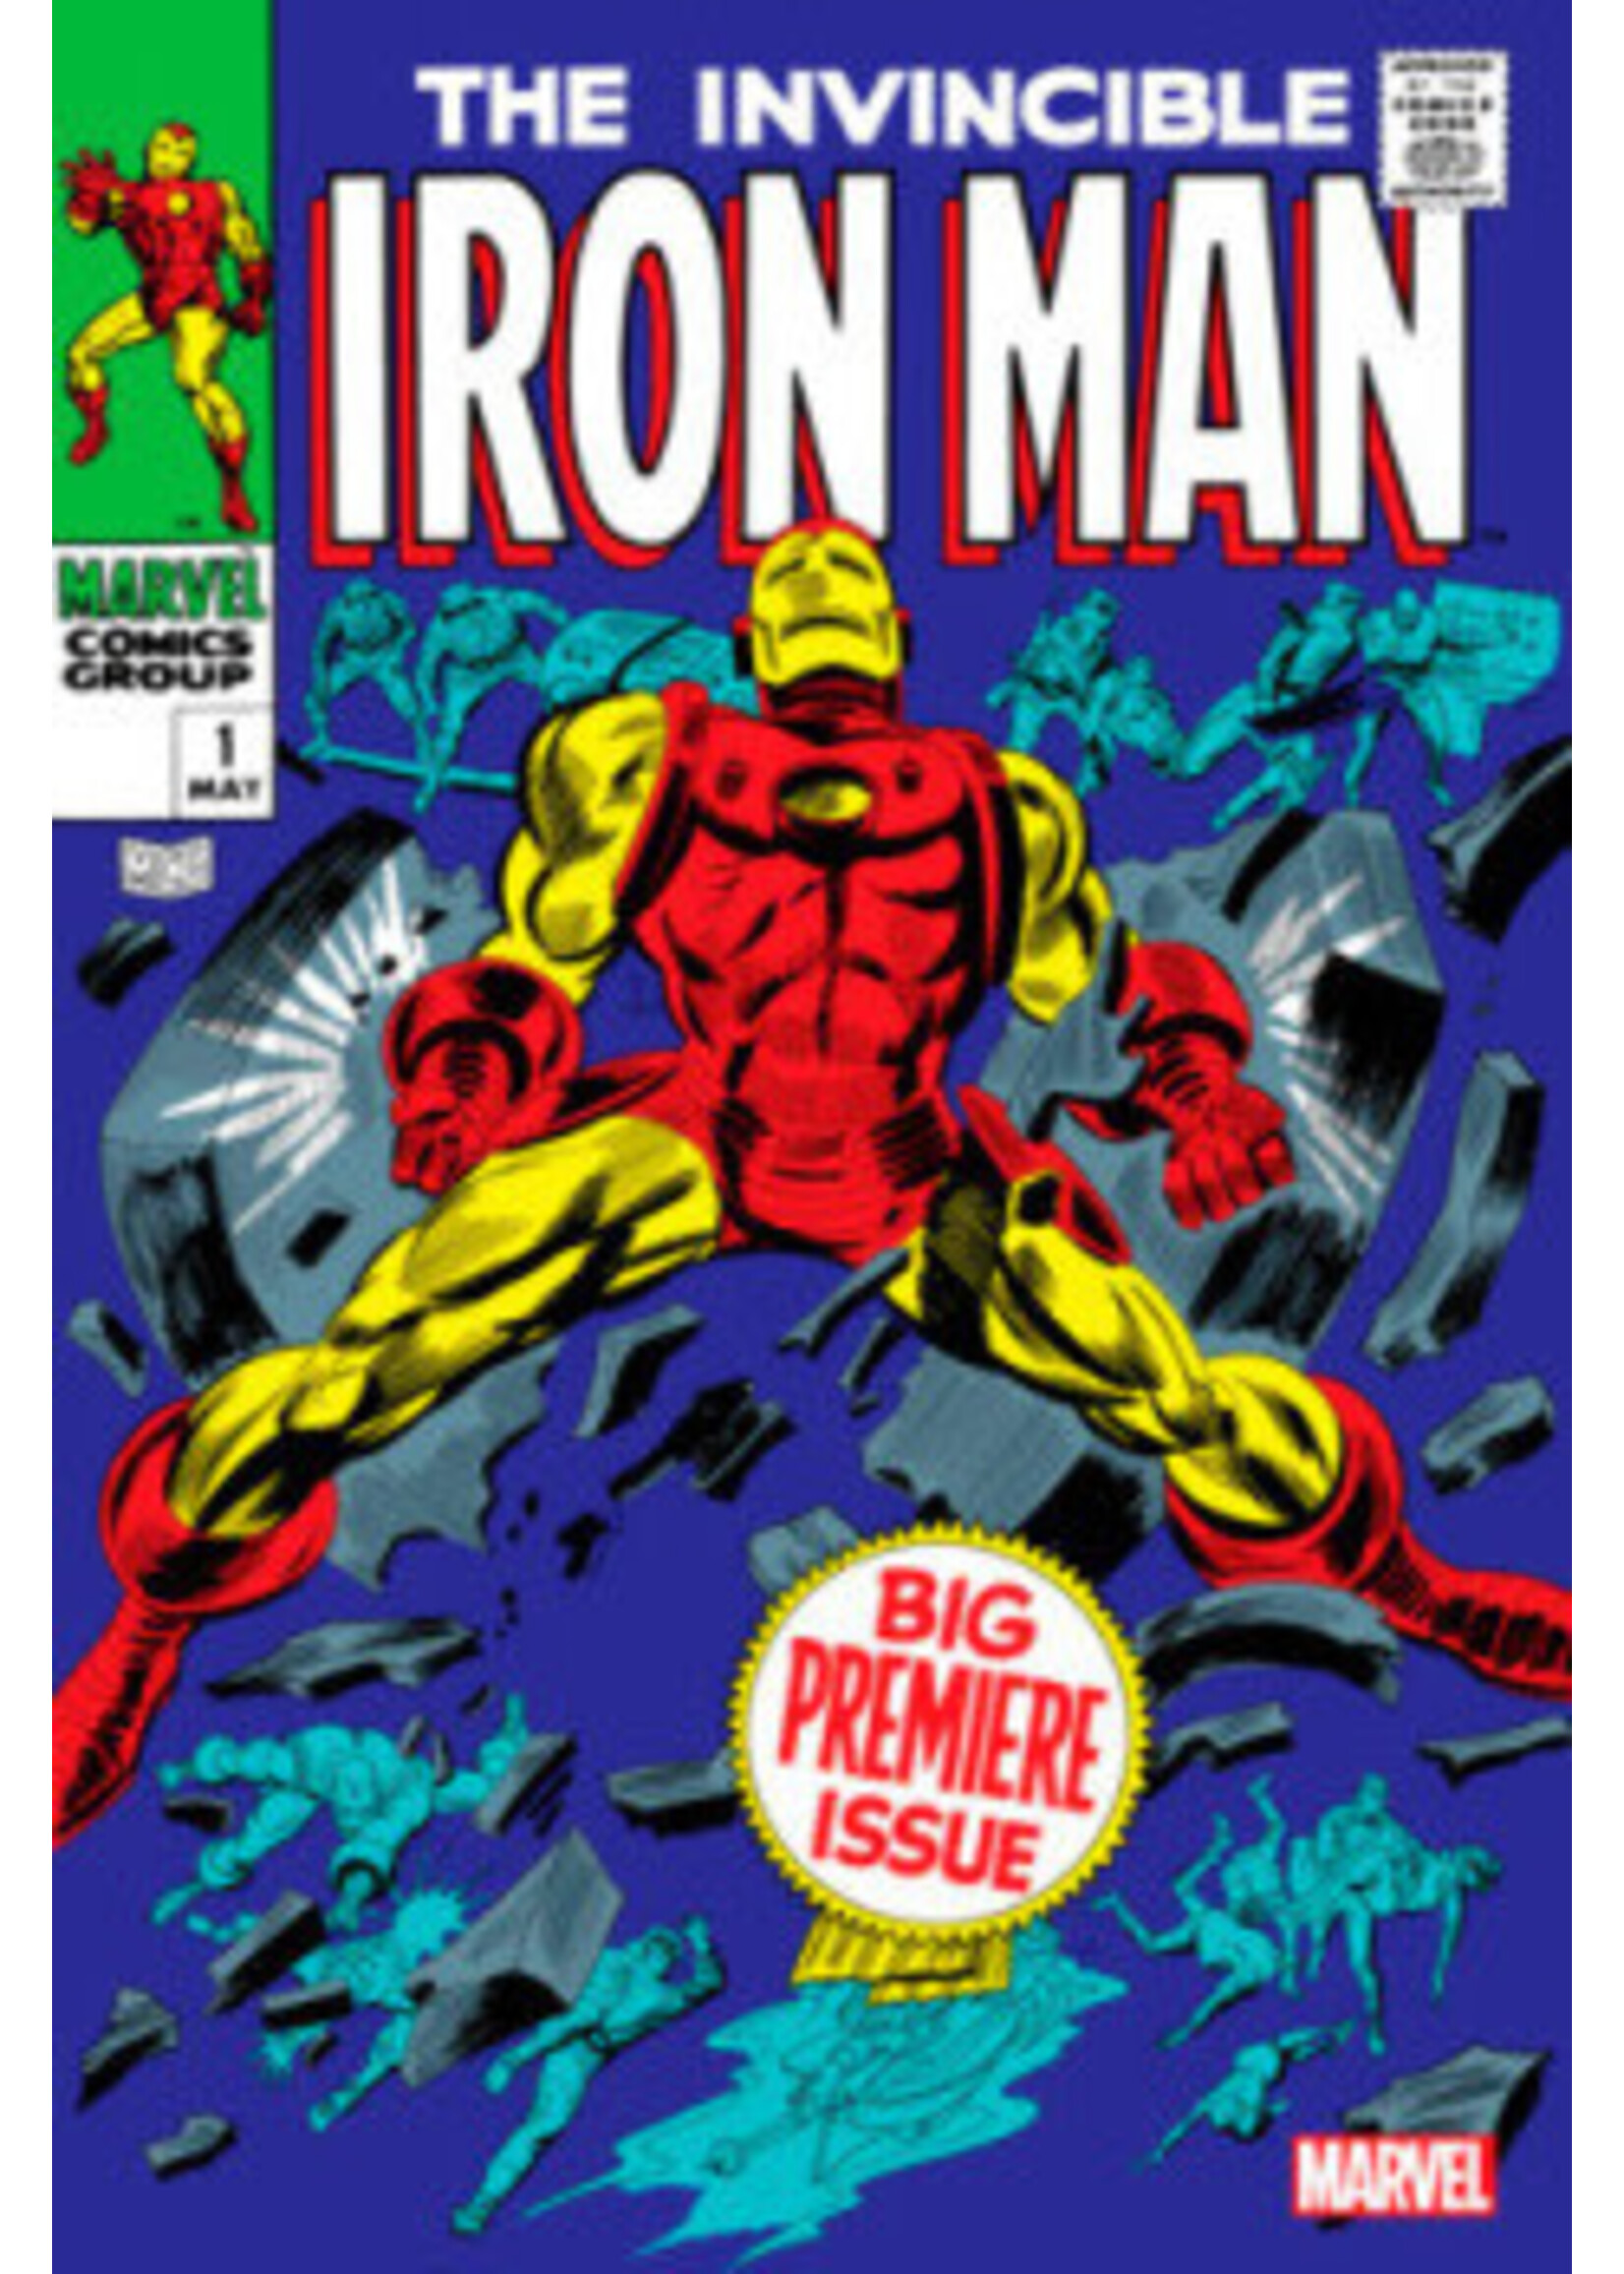 MARVEL COMICS IRON MAN (1968) #1 FACSIMILE EDITION